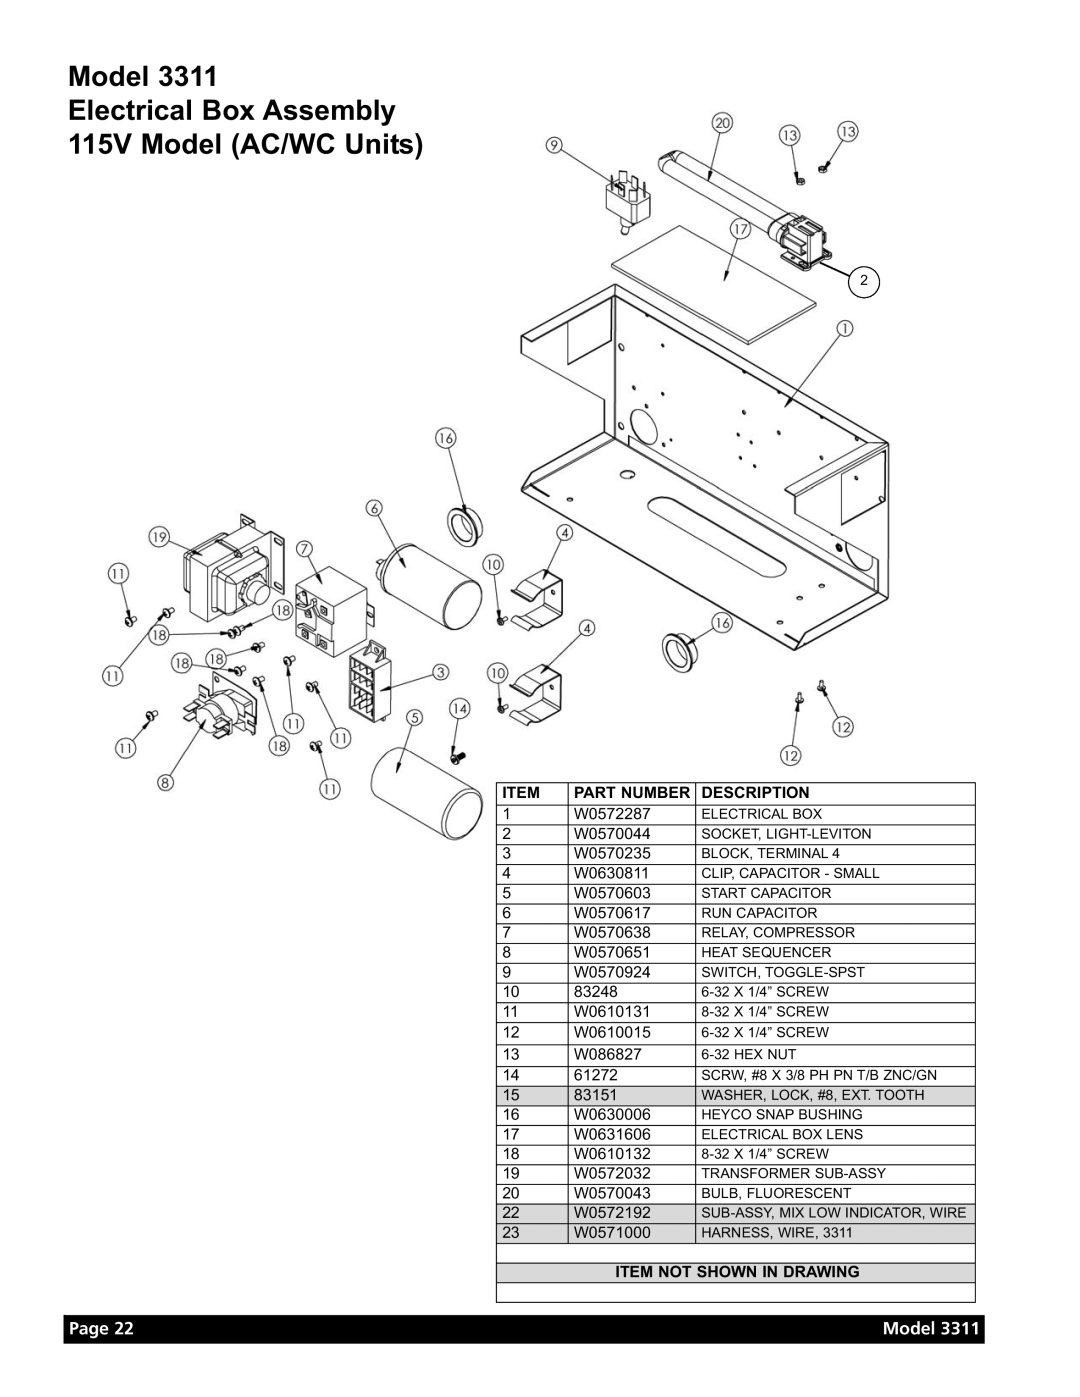 Grindmaster Model 3311 manual Model Electrical Box Assembly 115V Model AC/WC Units, Page, Part Number, Description 